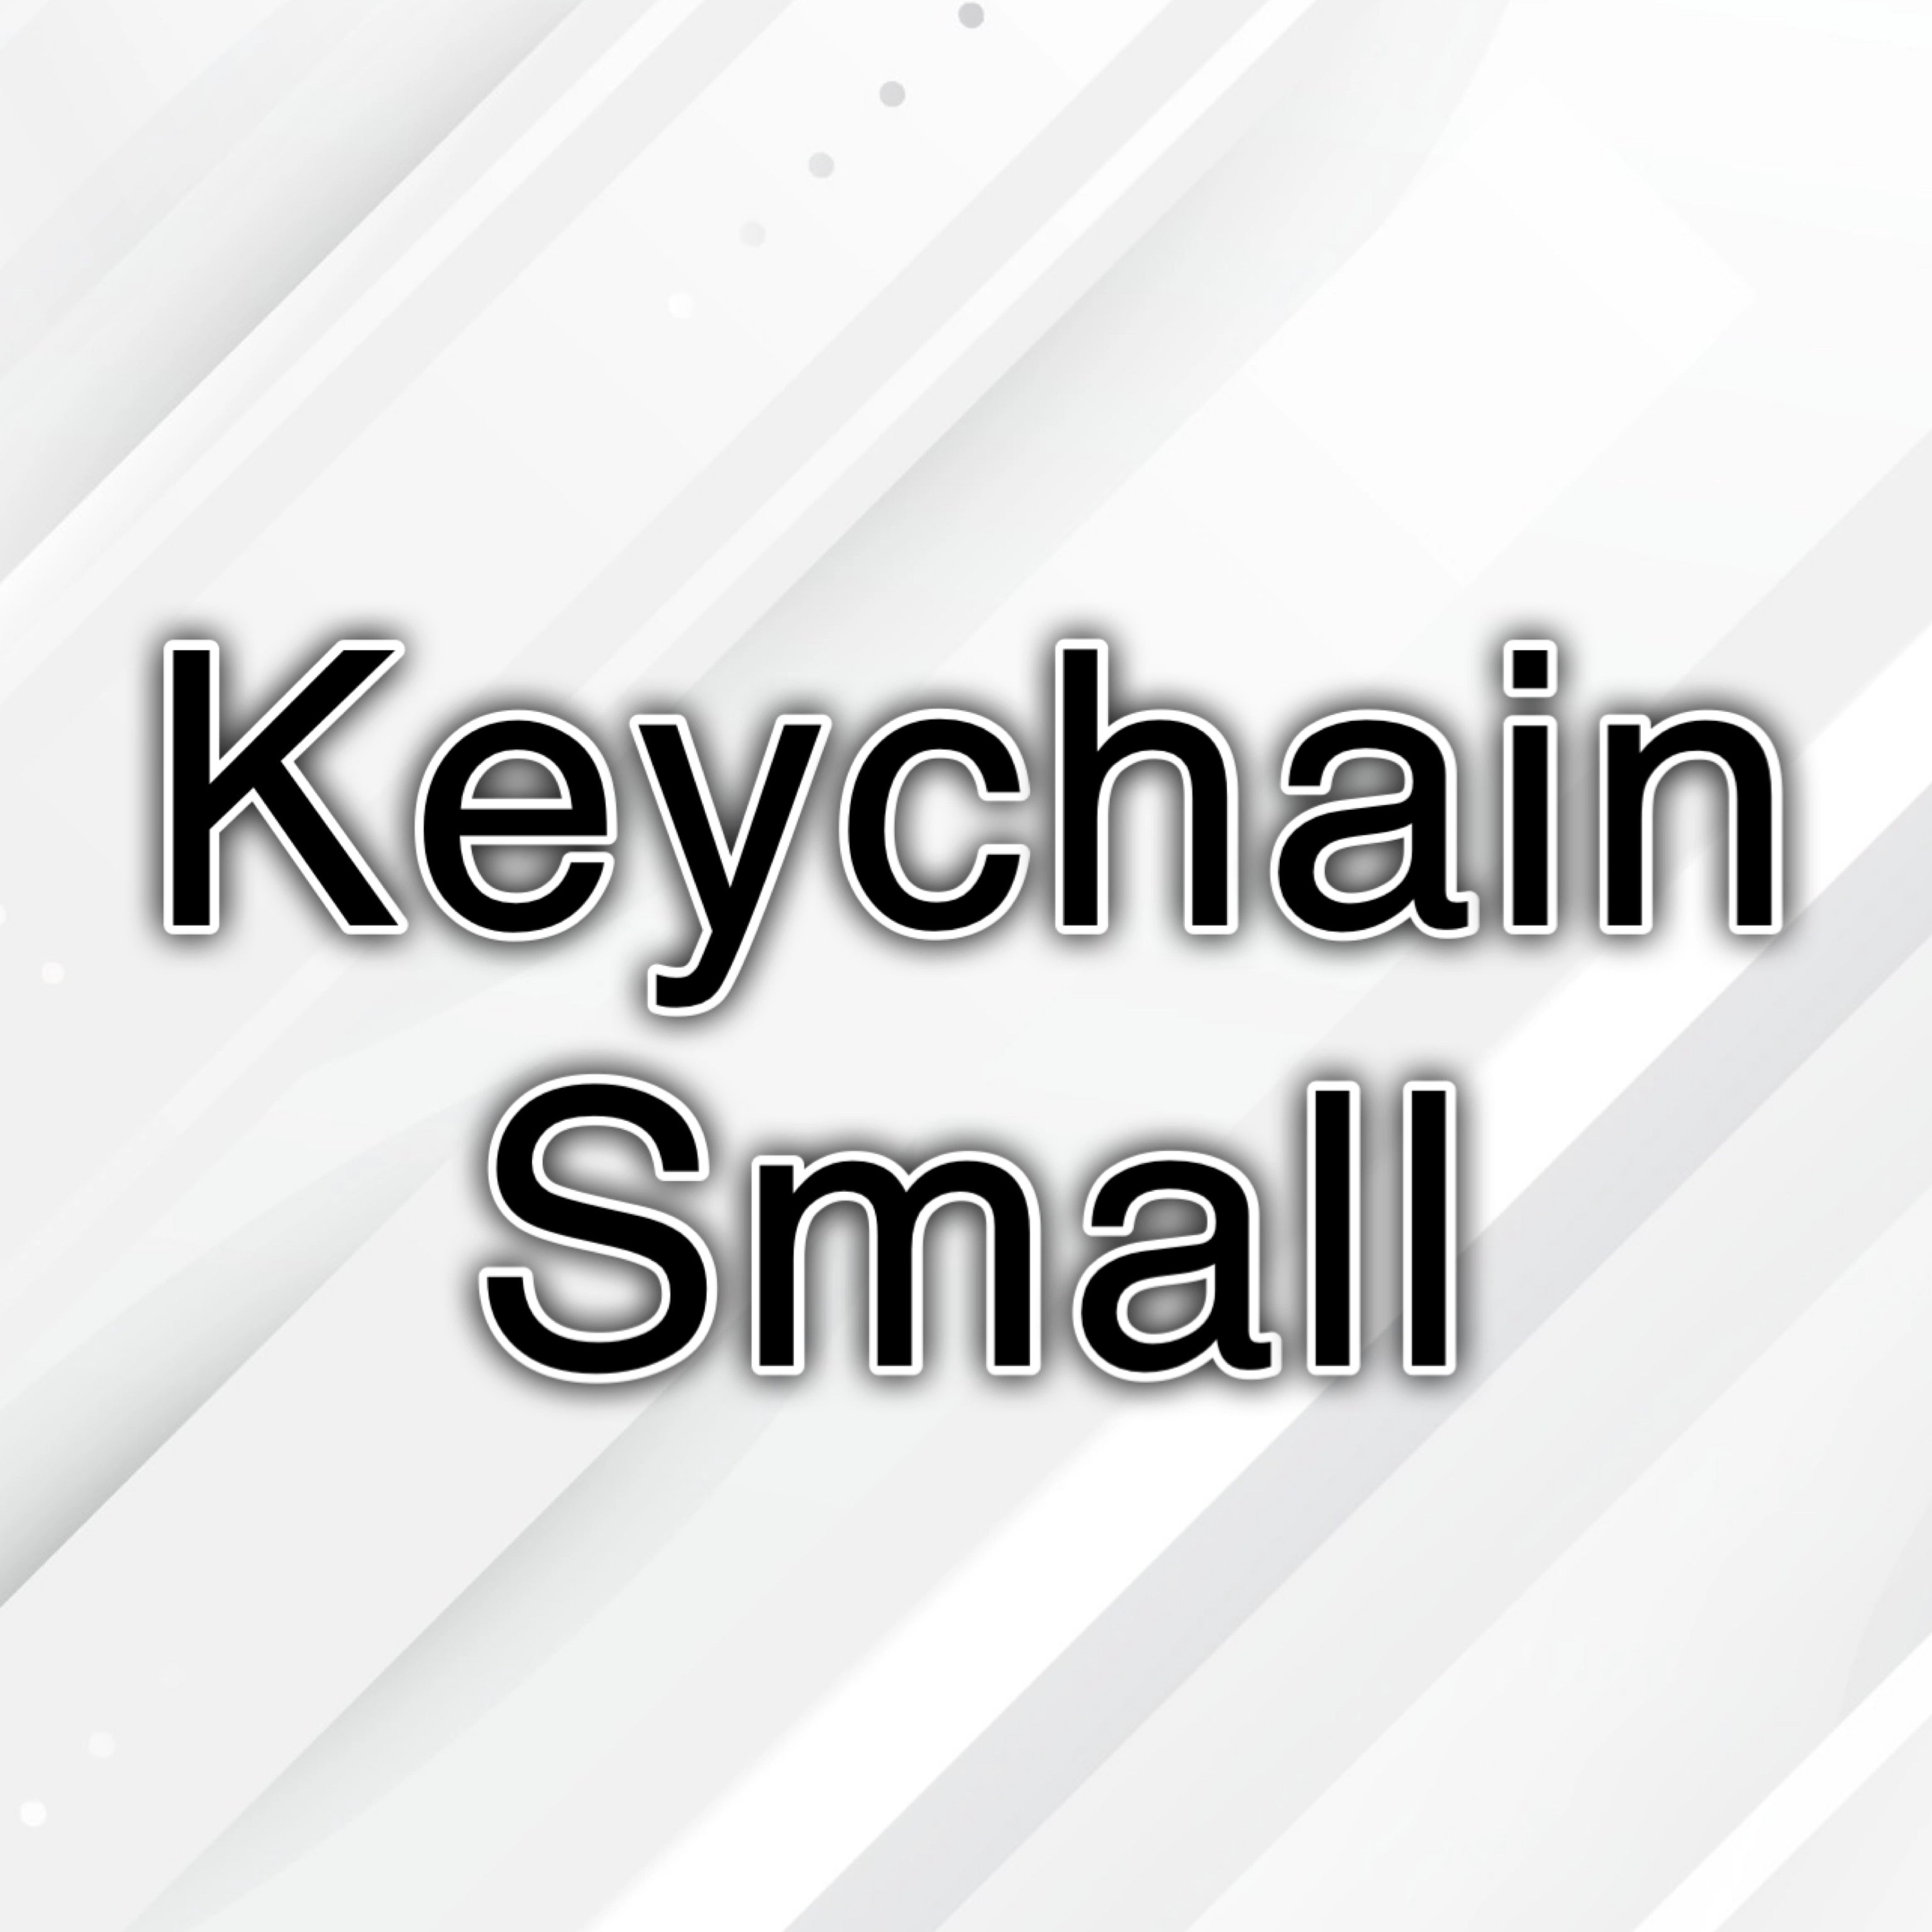 Keychain Small